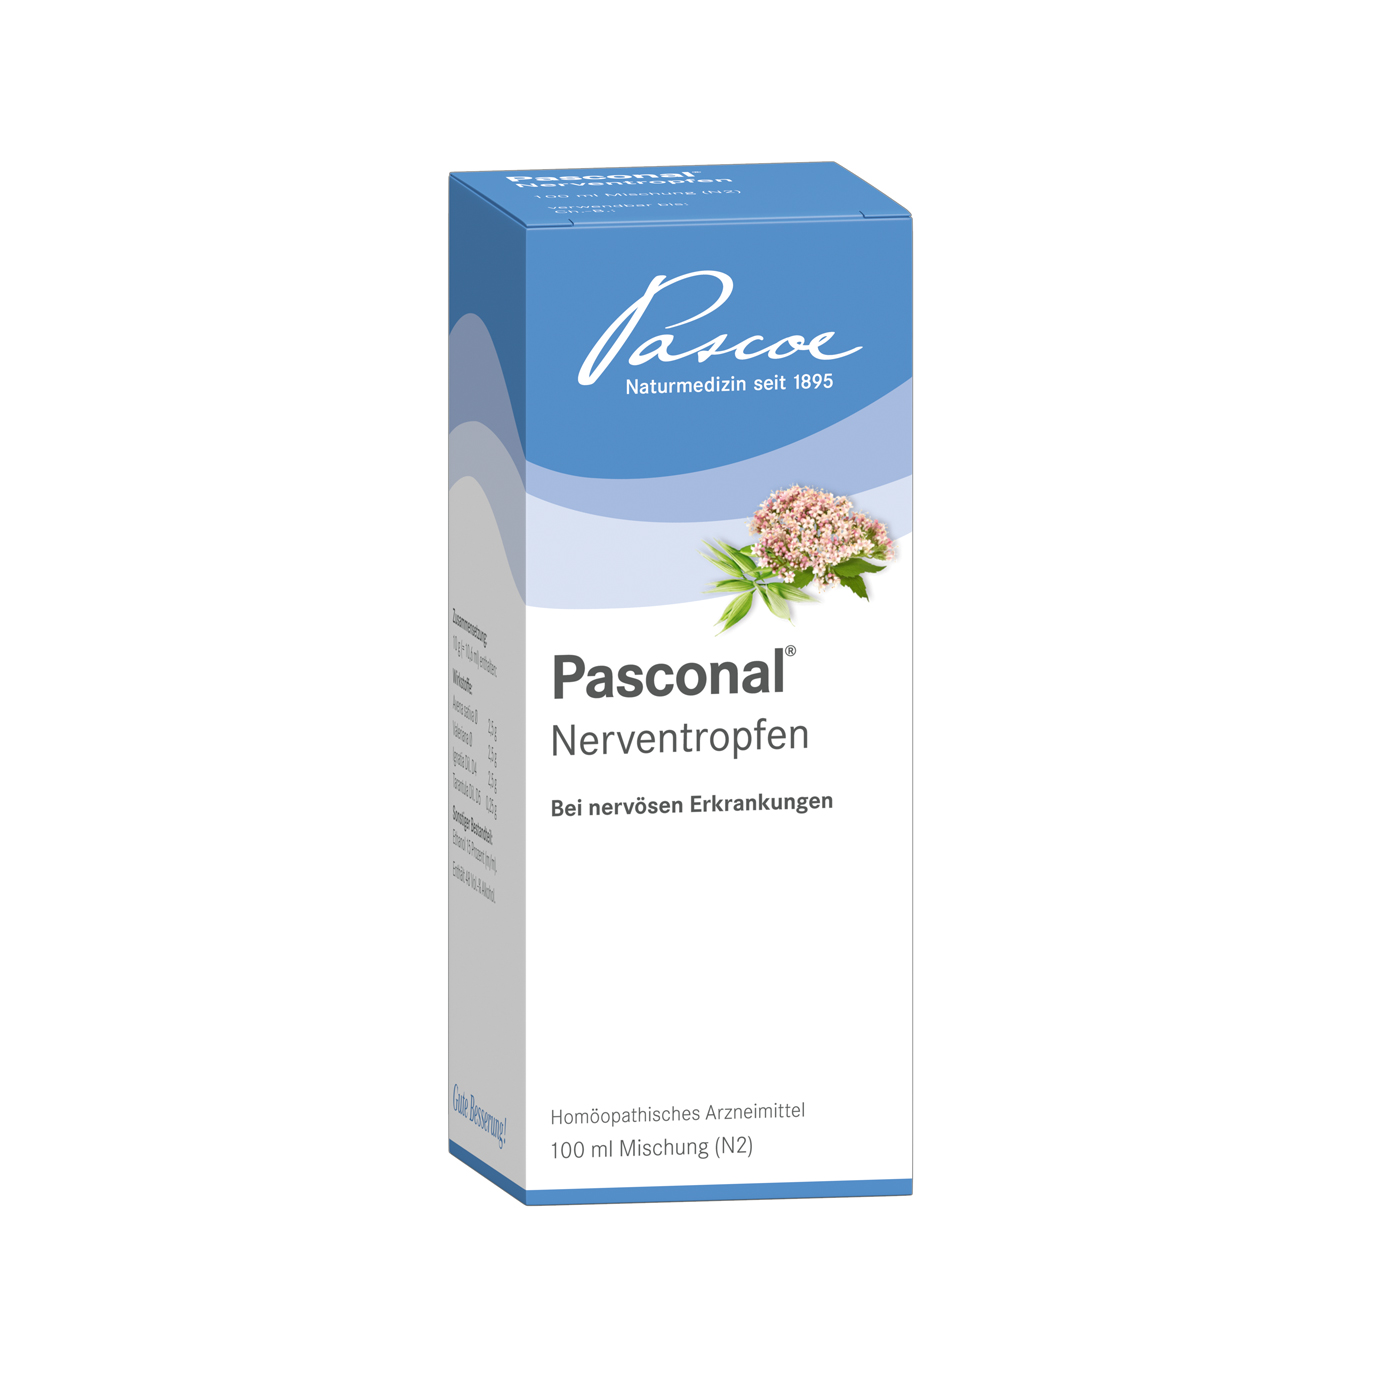 Pasconal 100 ml Nervdentropfen Packshot PZN 00667193